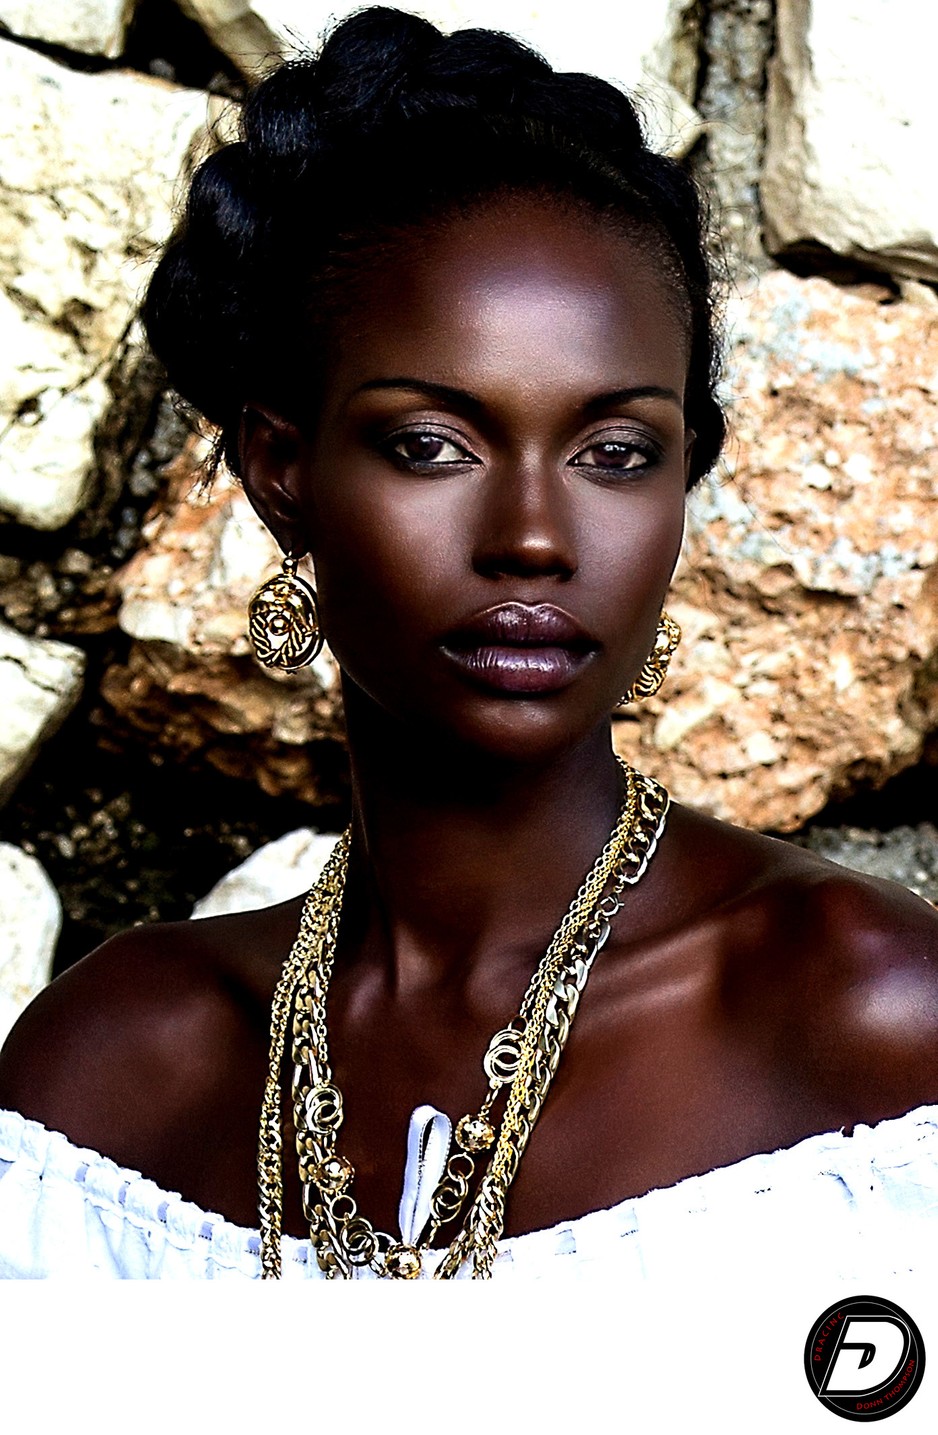  Haitian Beauty Harlem Photographer 